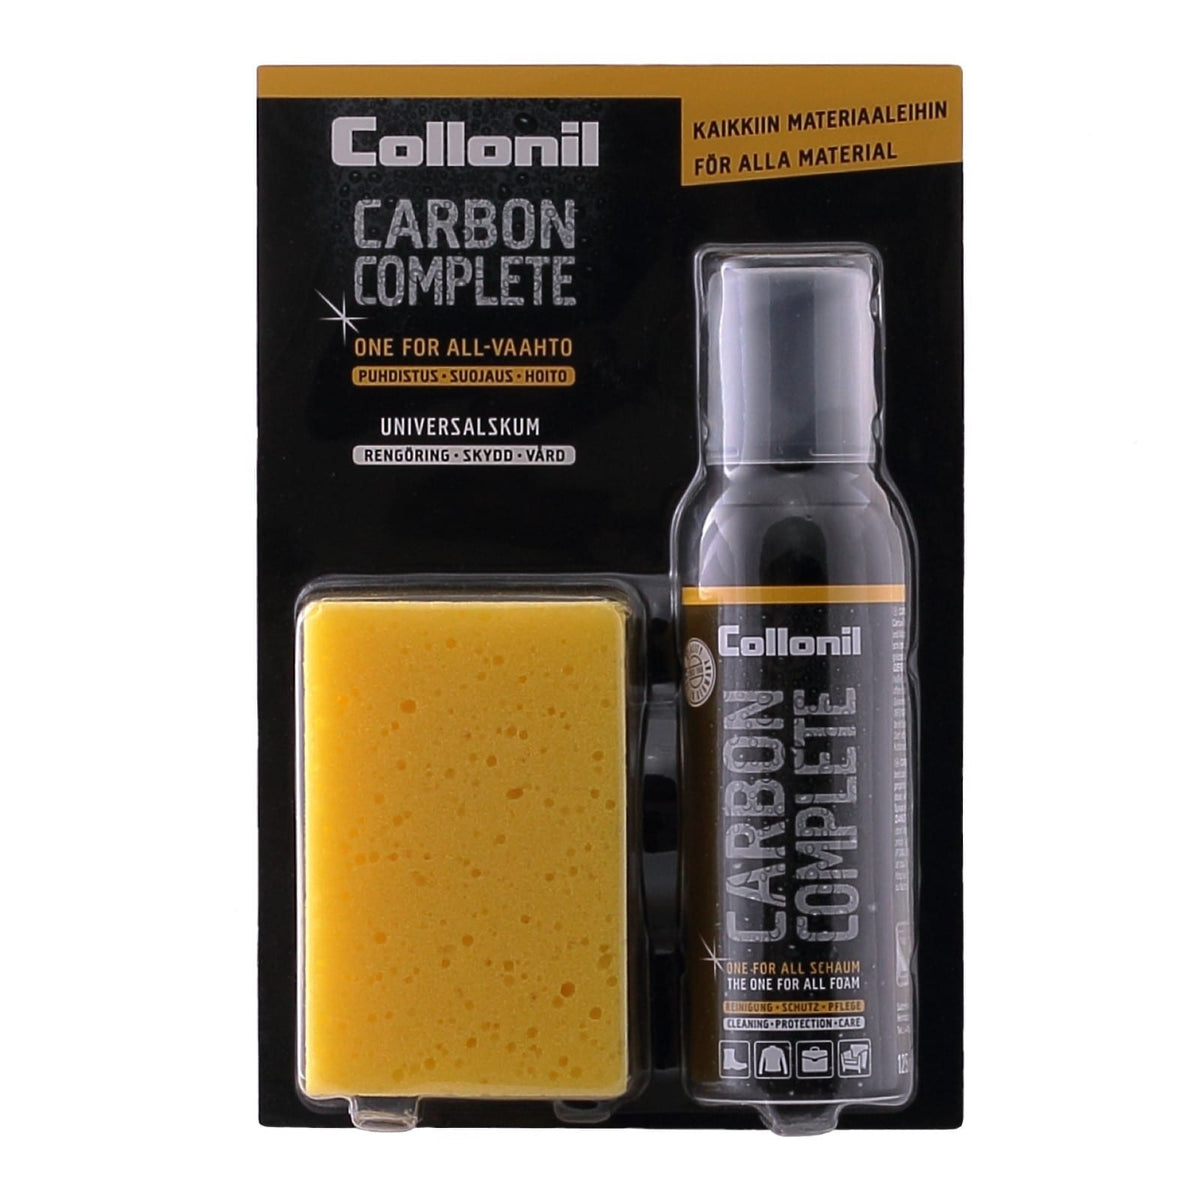 Carbon Complete - puhdistus, hoito, suojaus, 125 ml